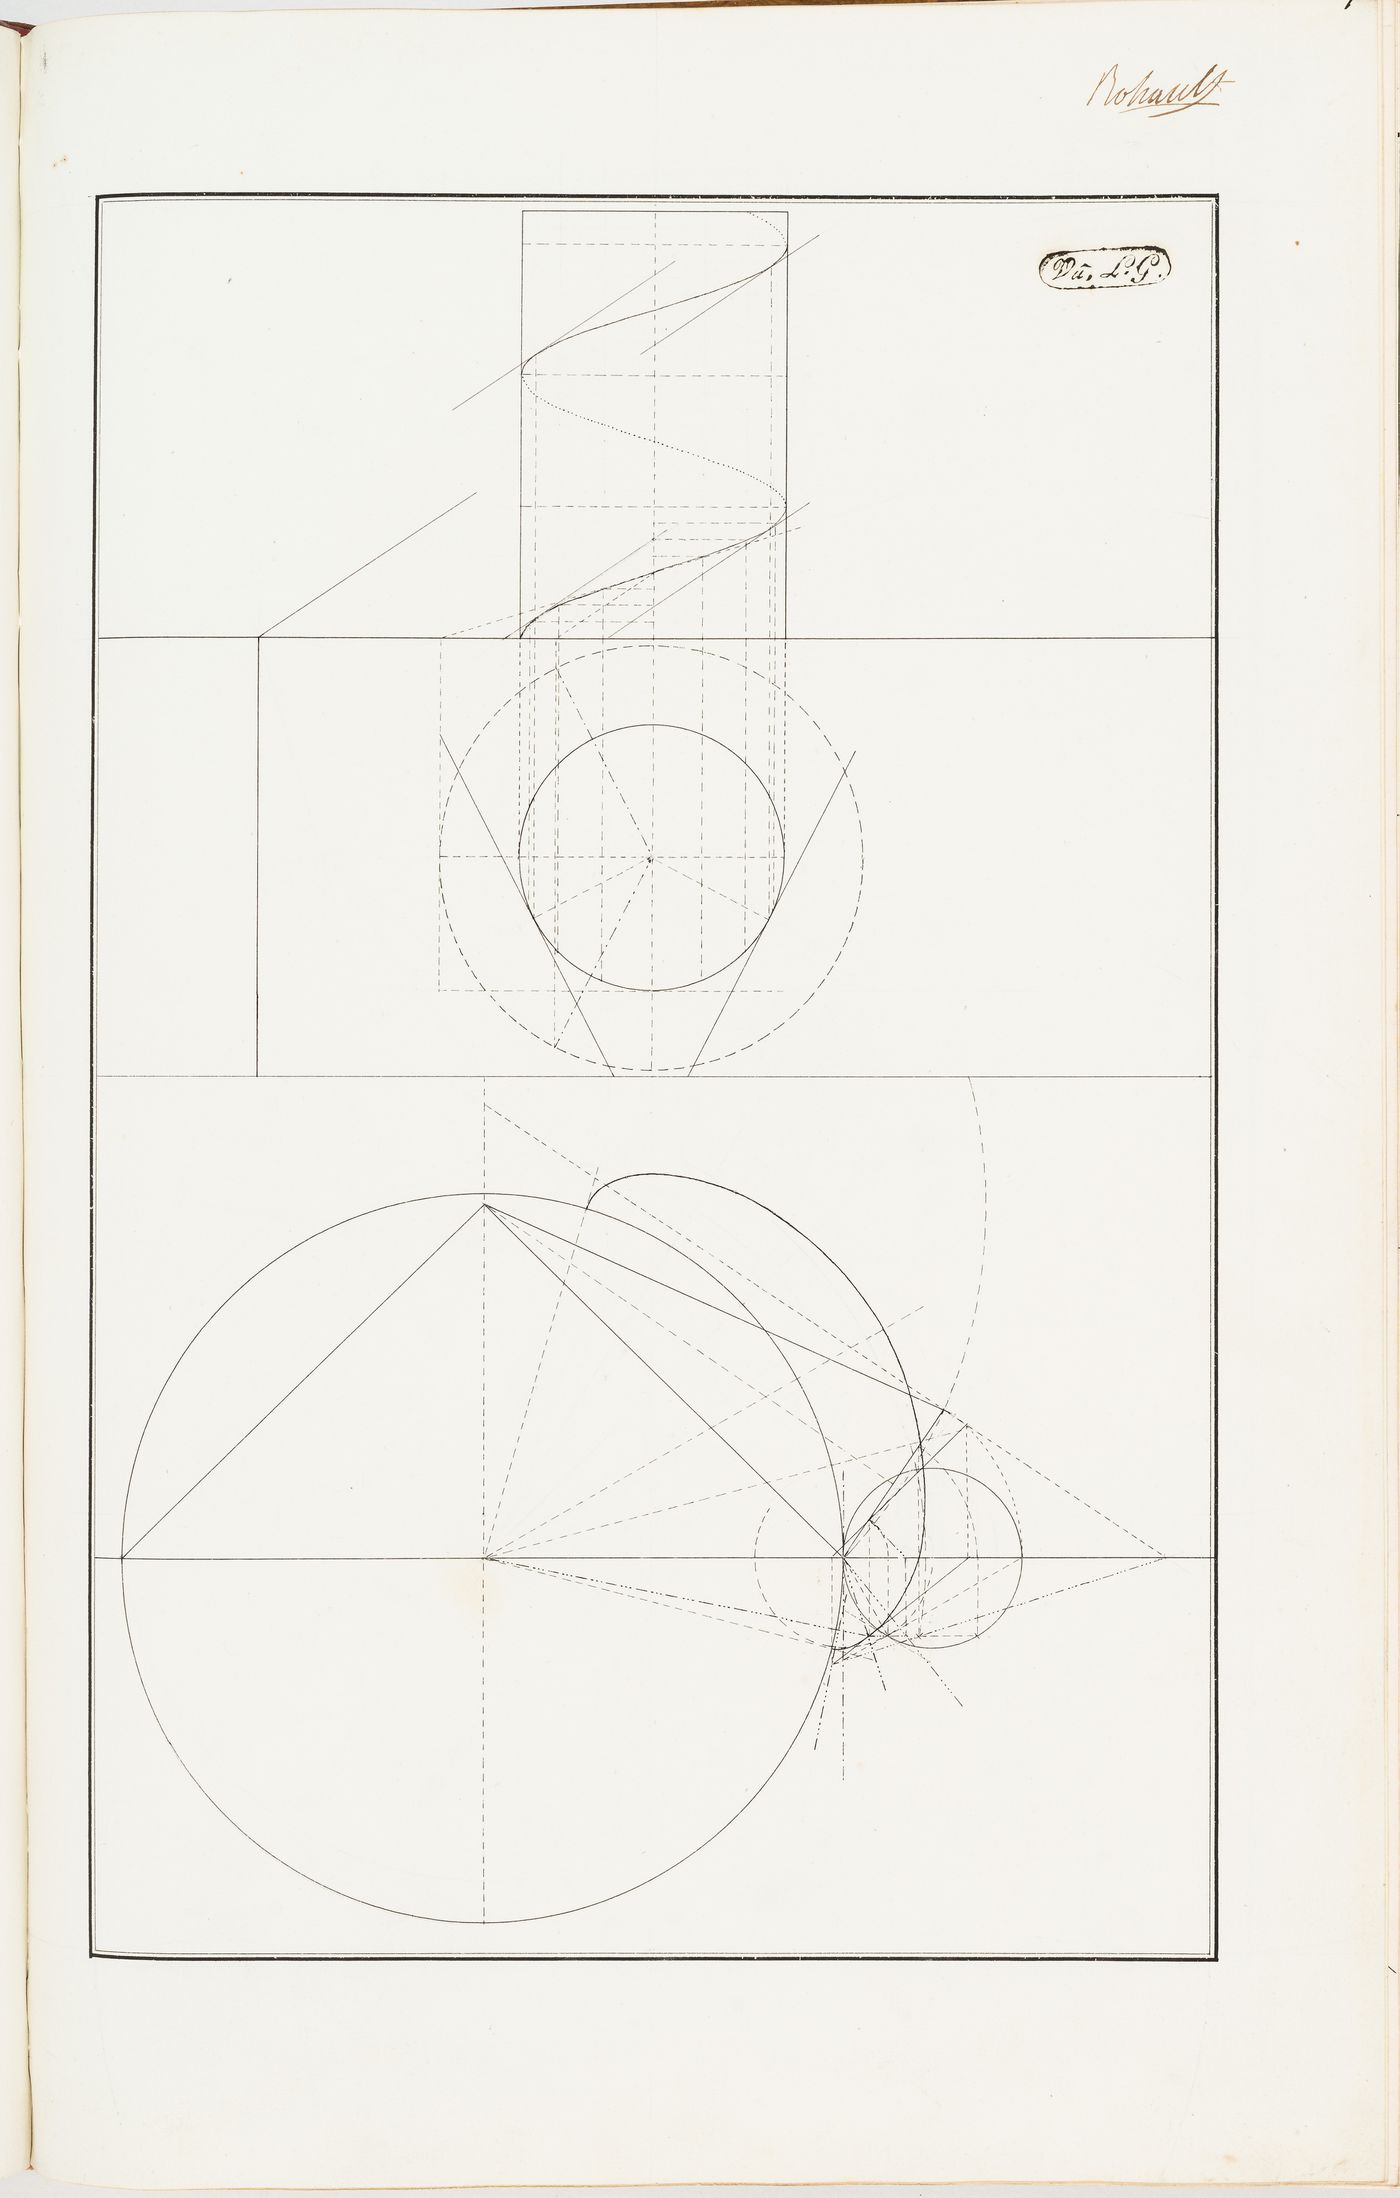 Two geometry exercises